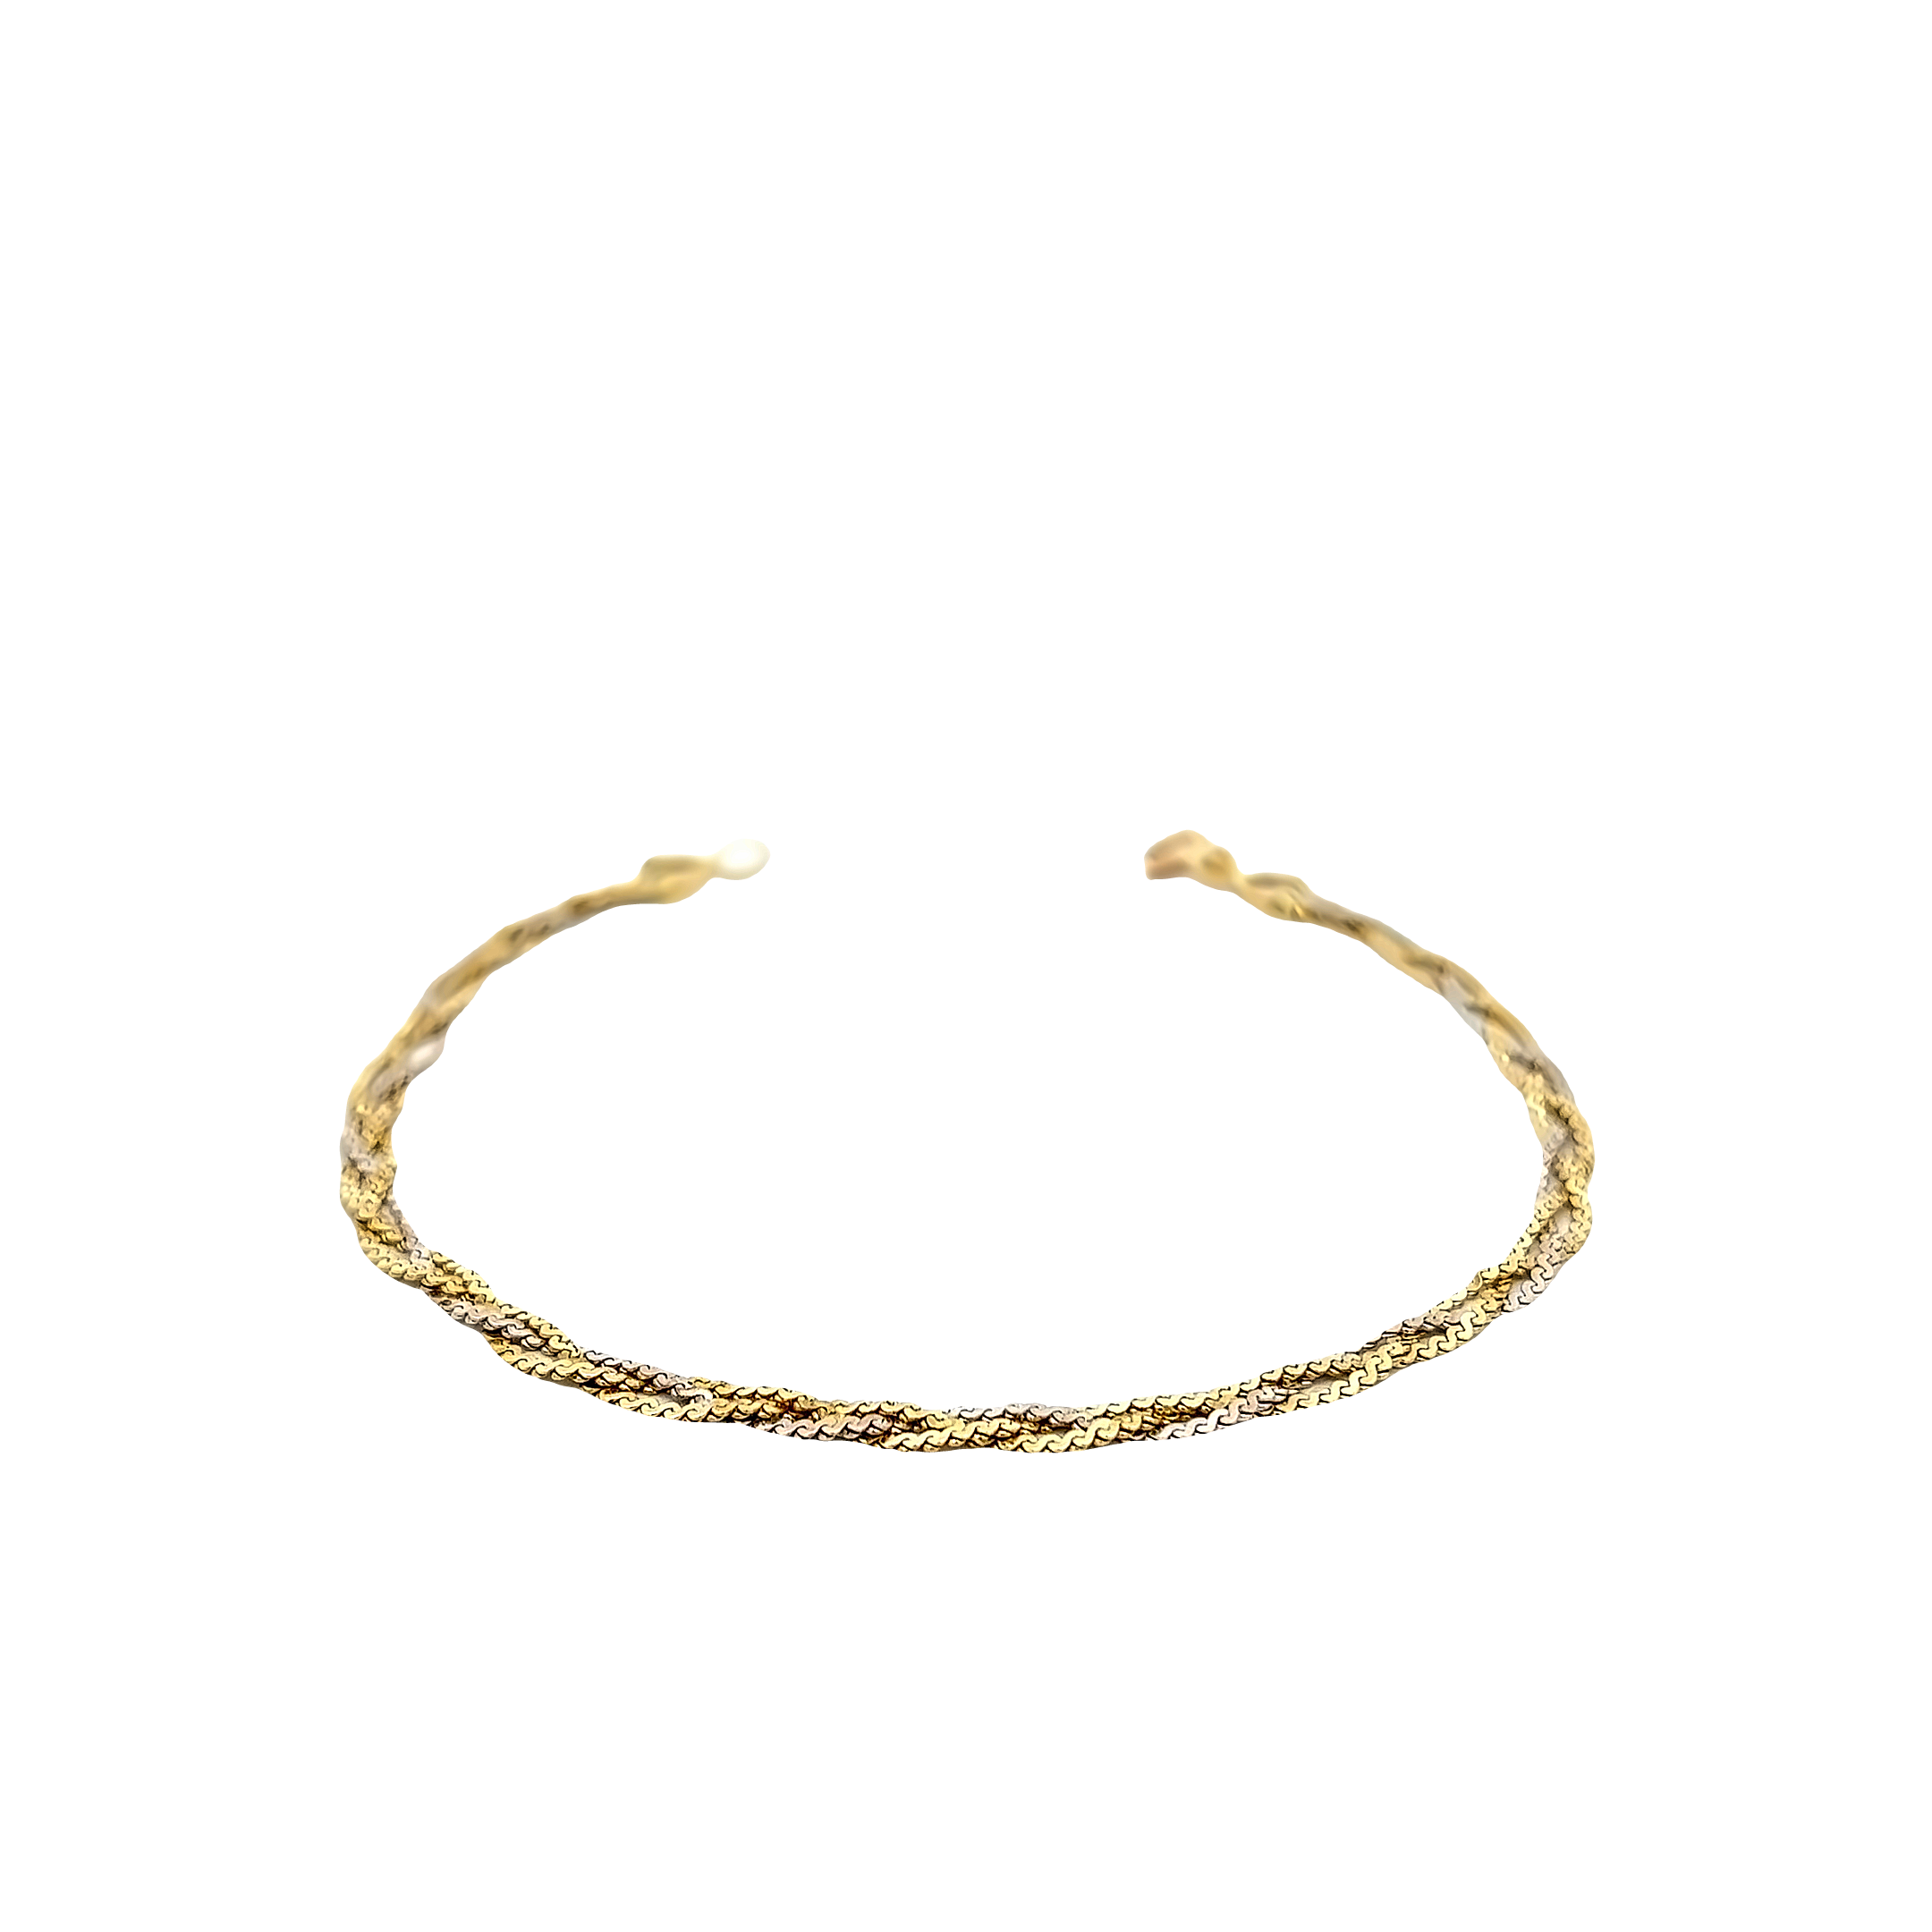 14 Karat yellow and white gold braided bracelet Length 7.5